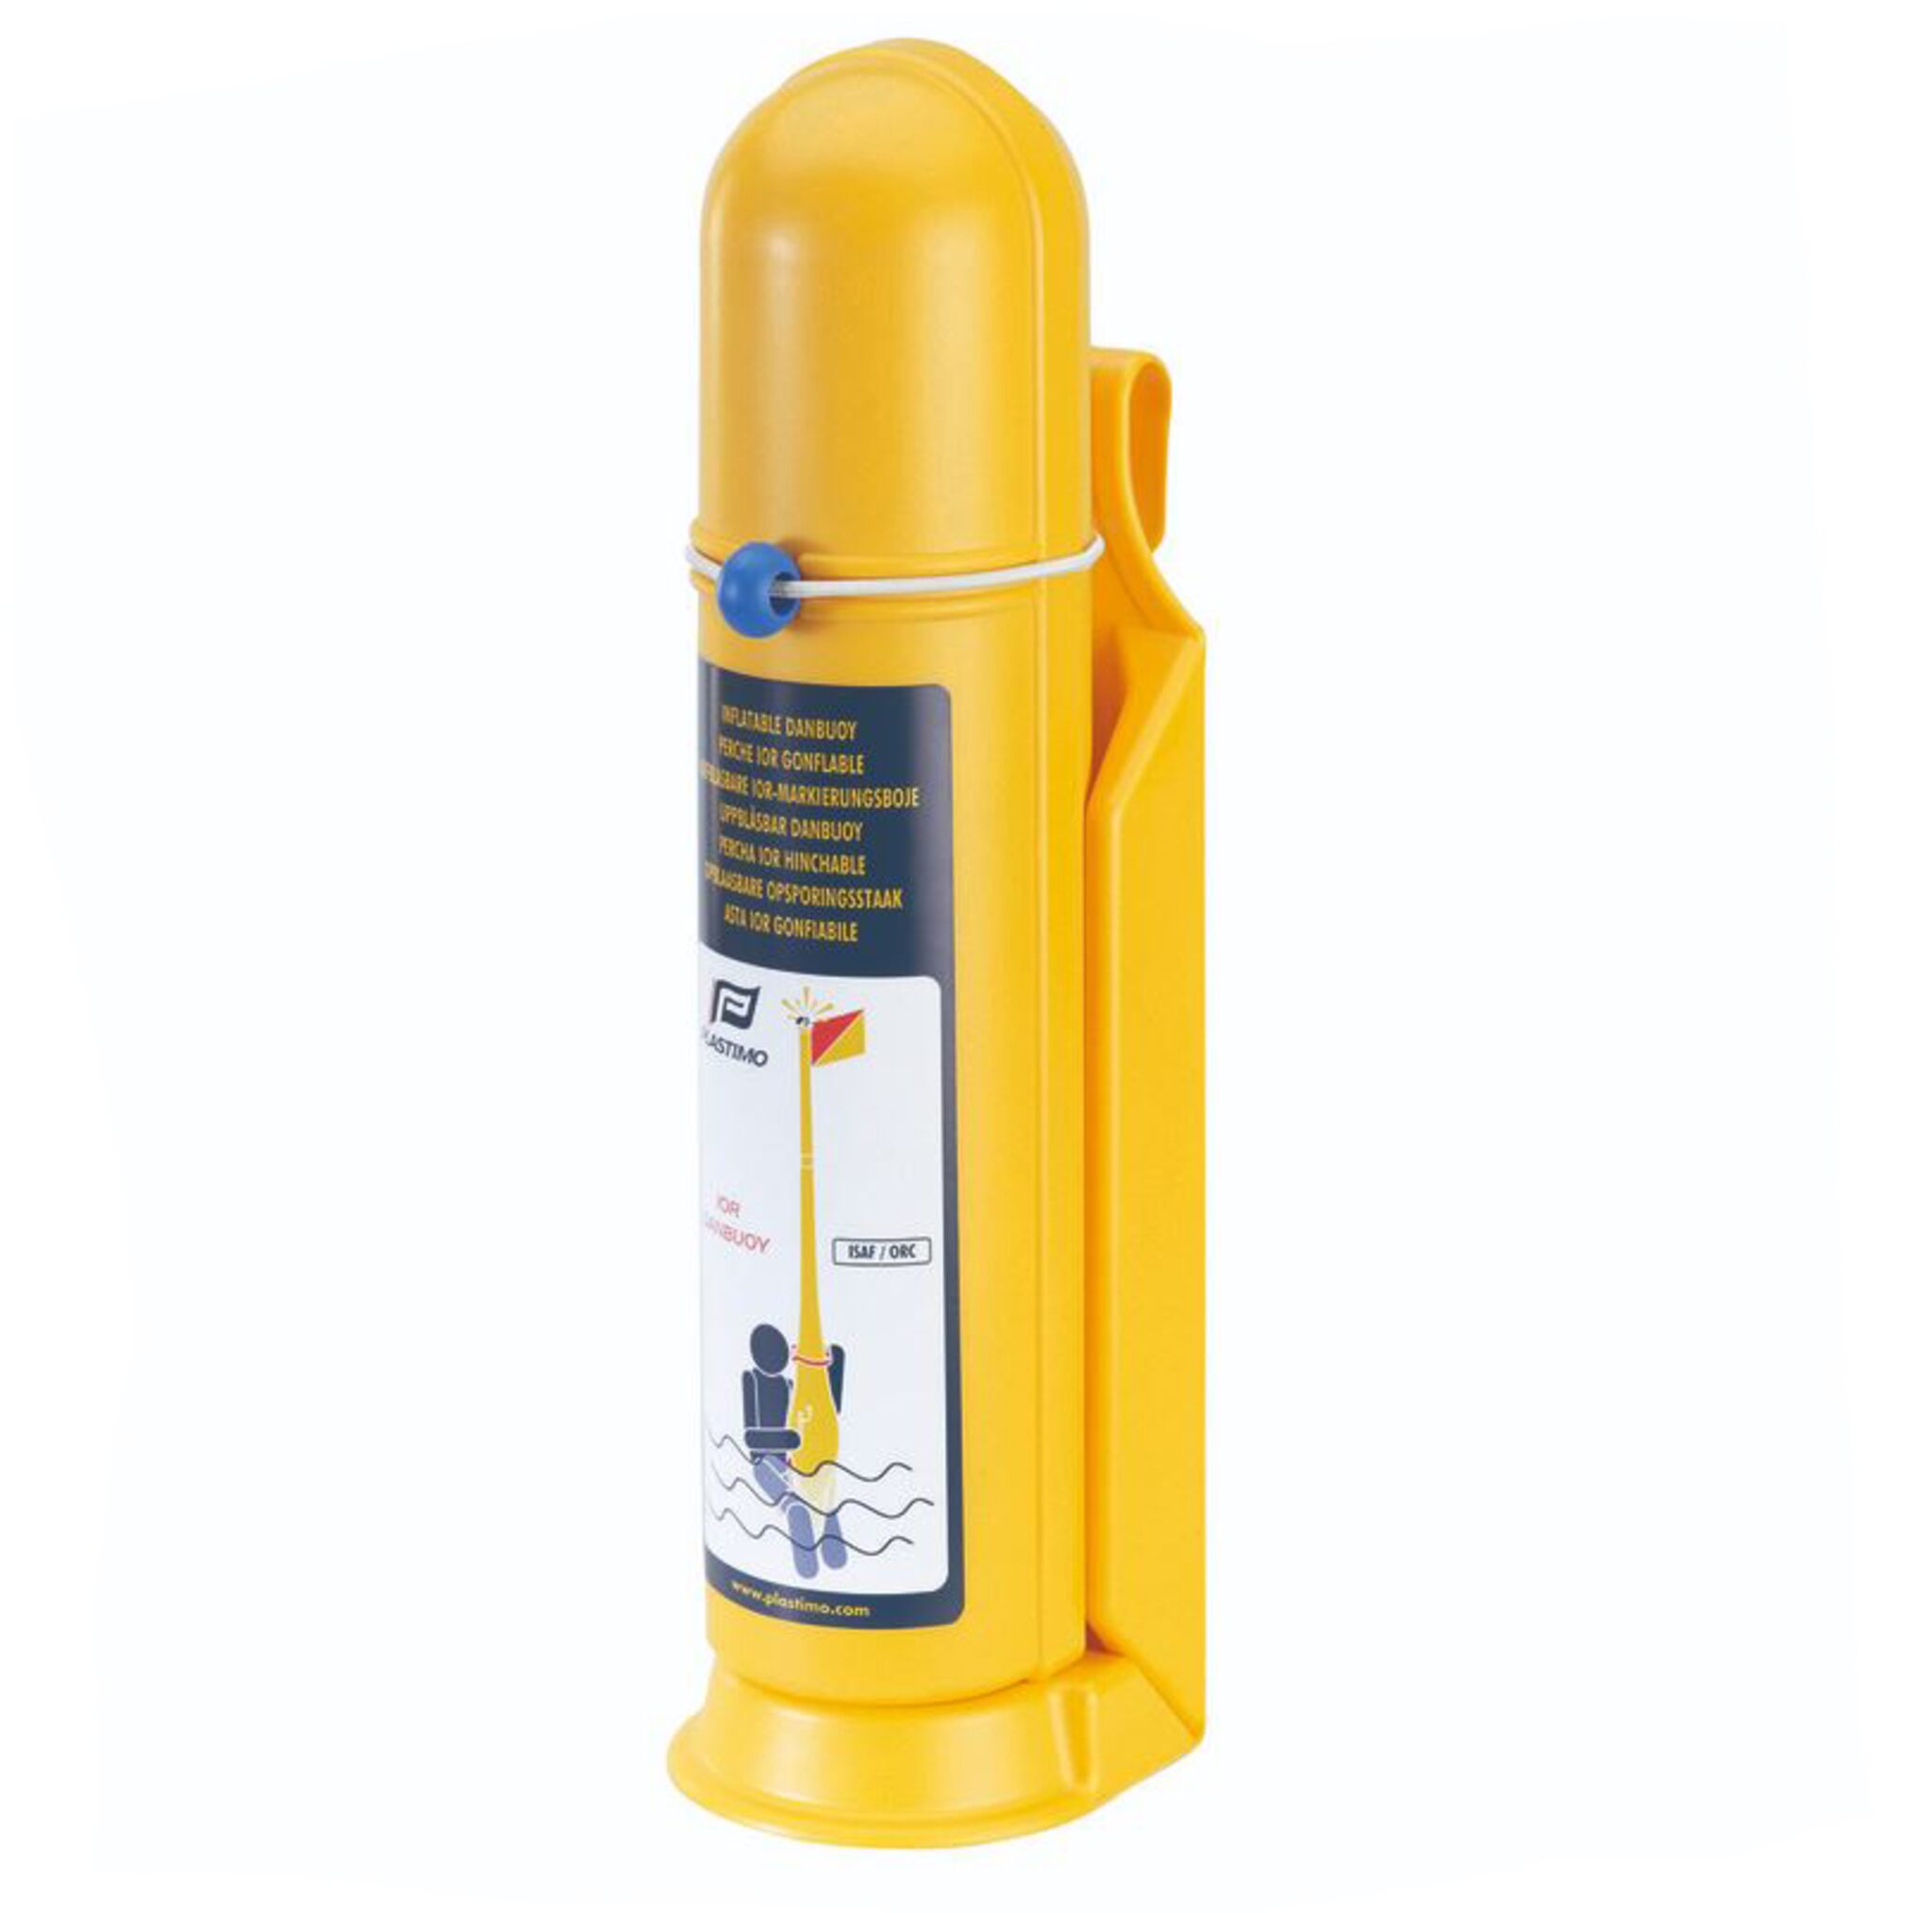 Plastimo marker buoy IOR, inflatable